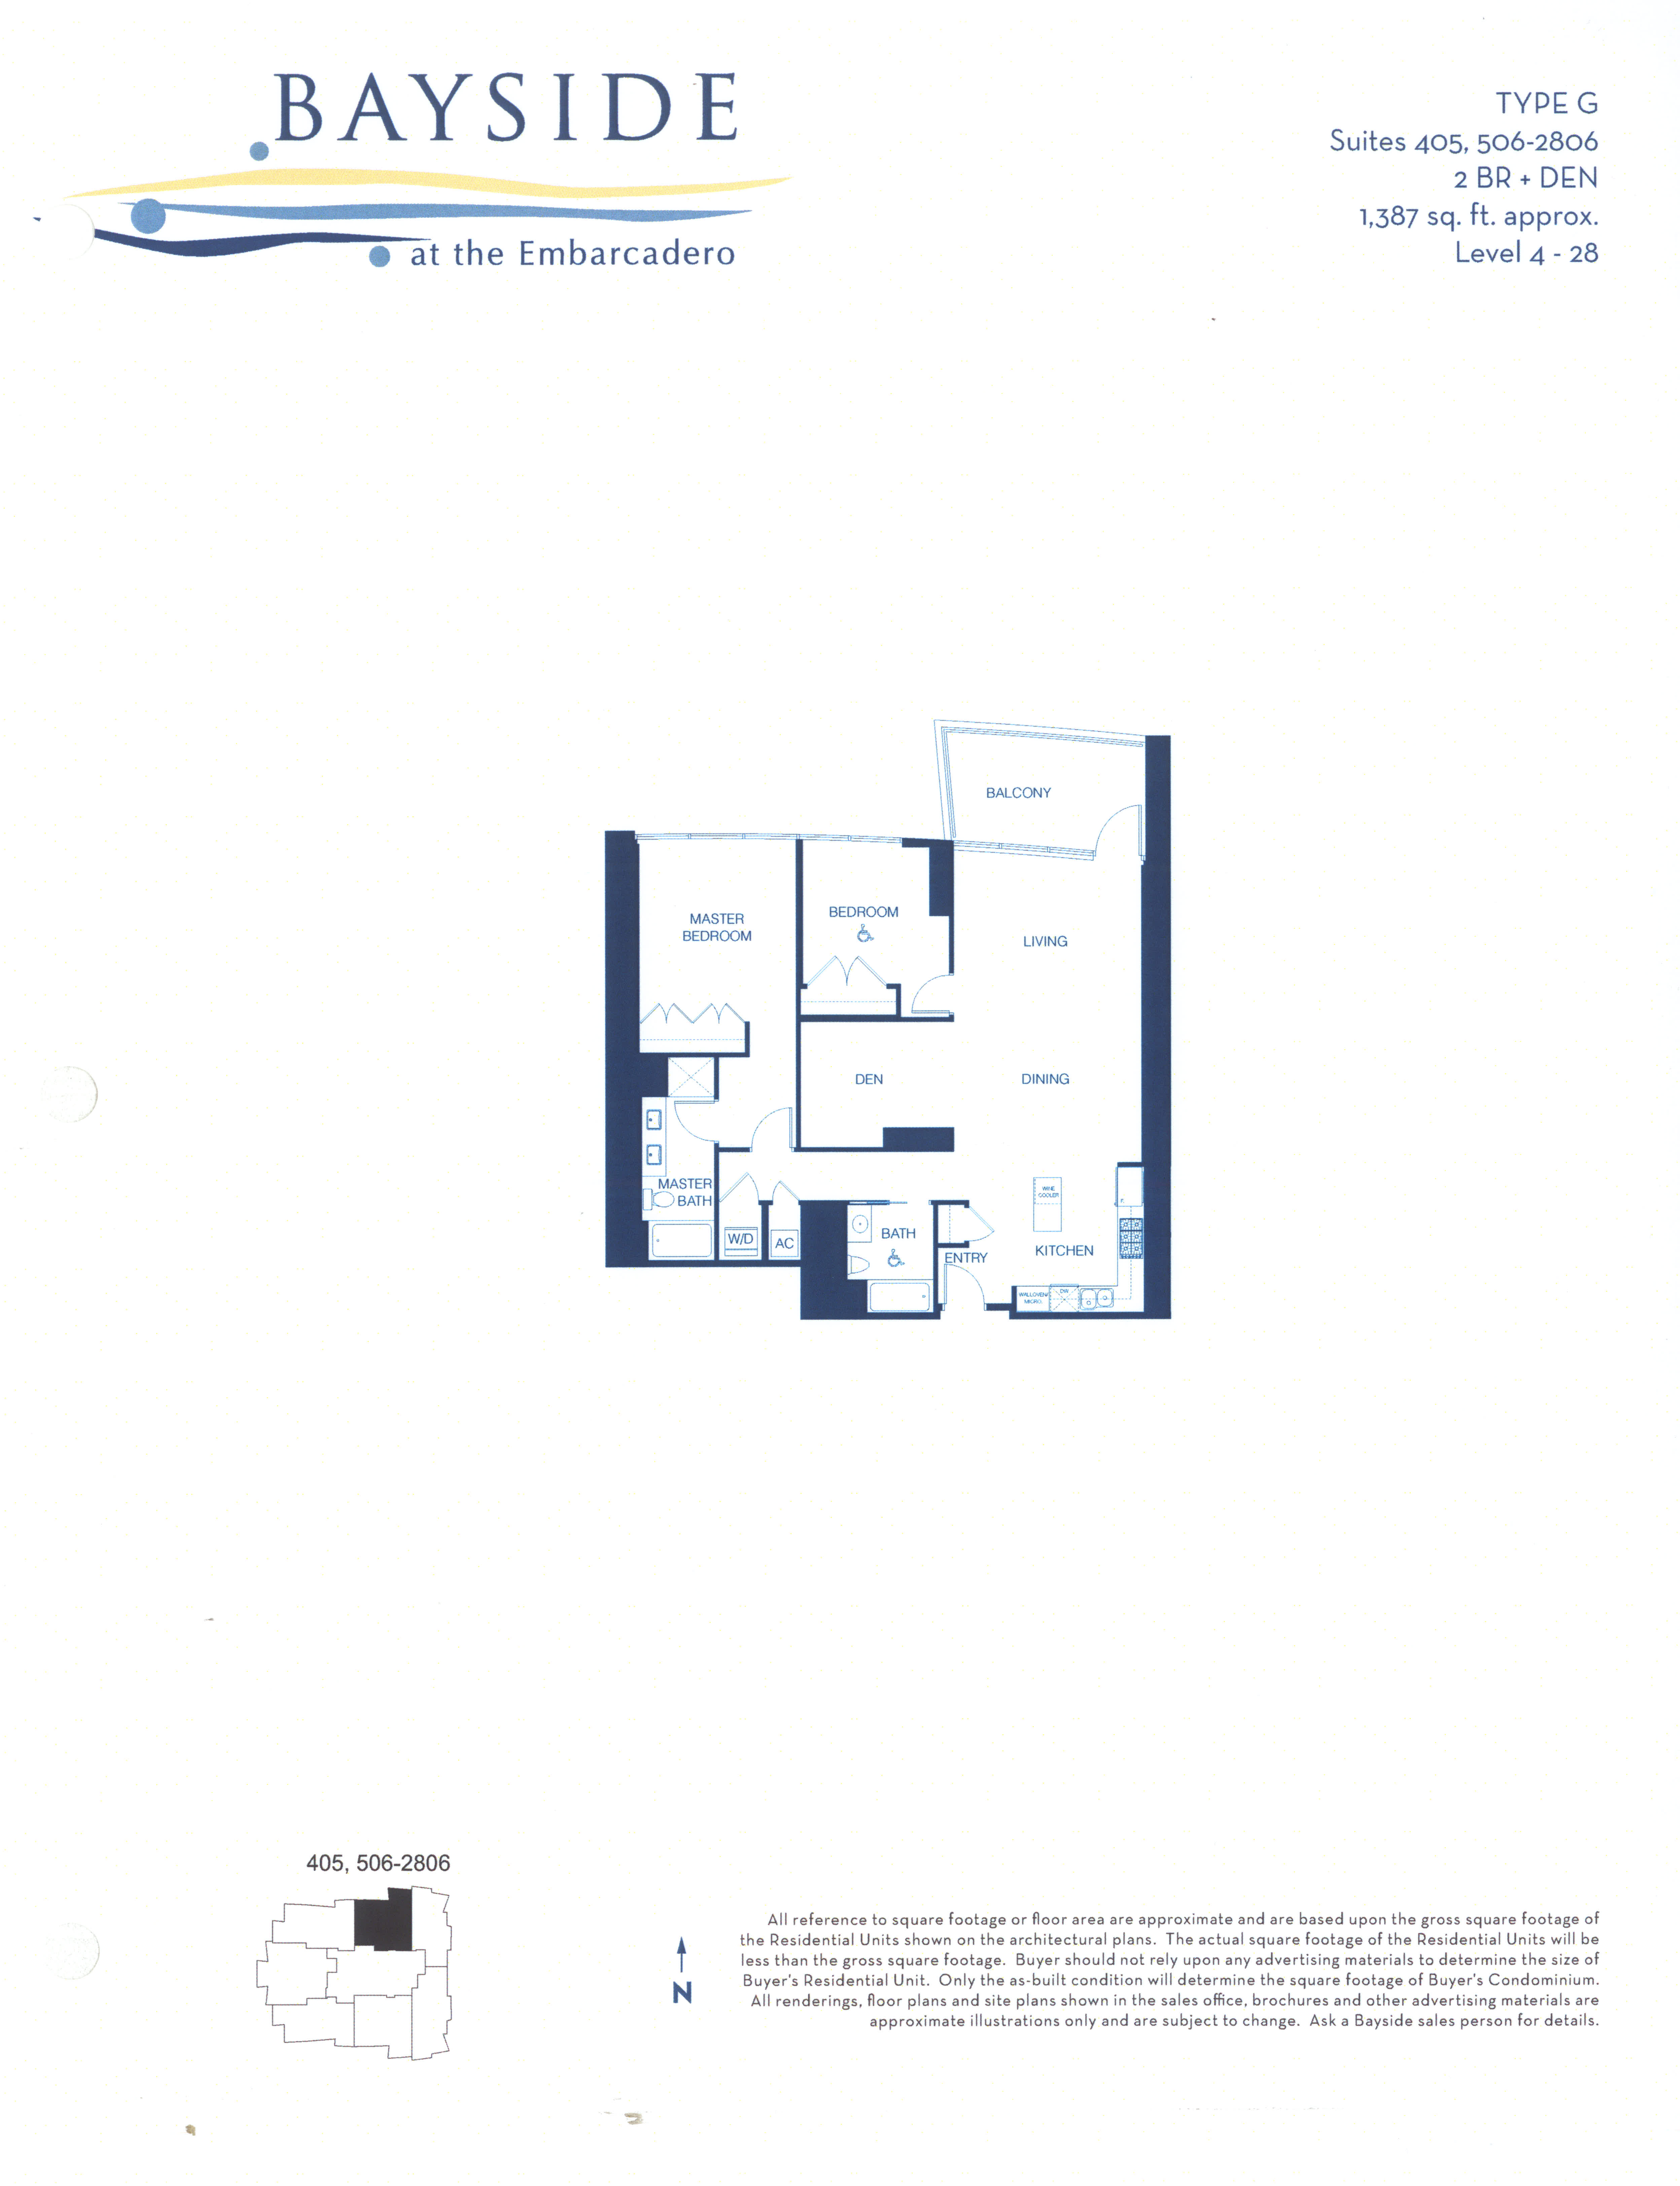 Bayside Floor Plan Level 4- 28 Type G